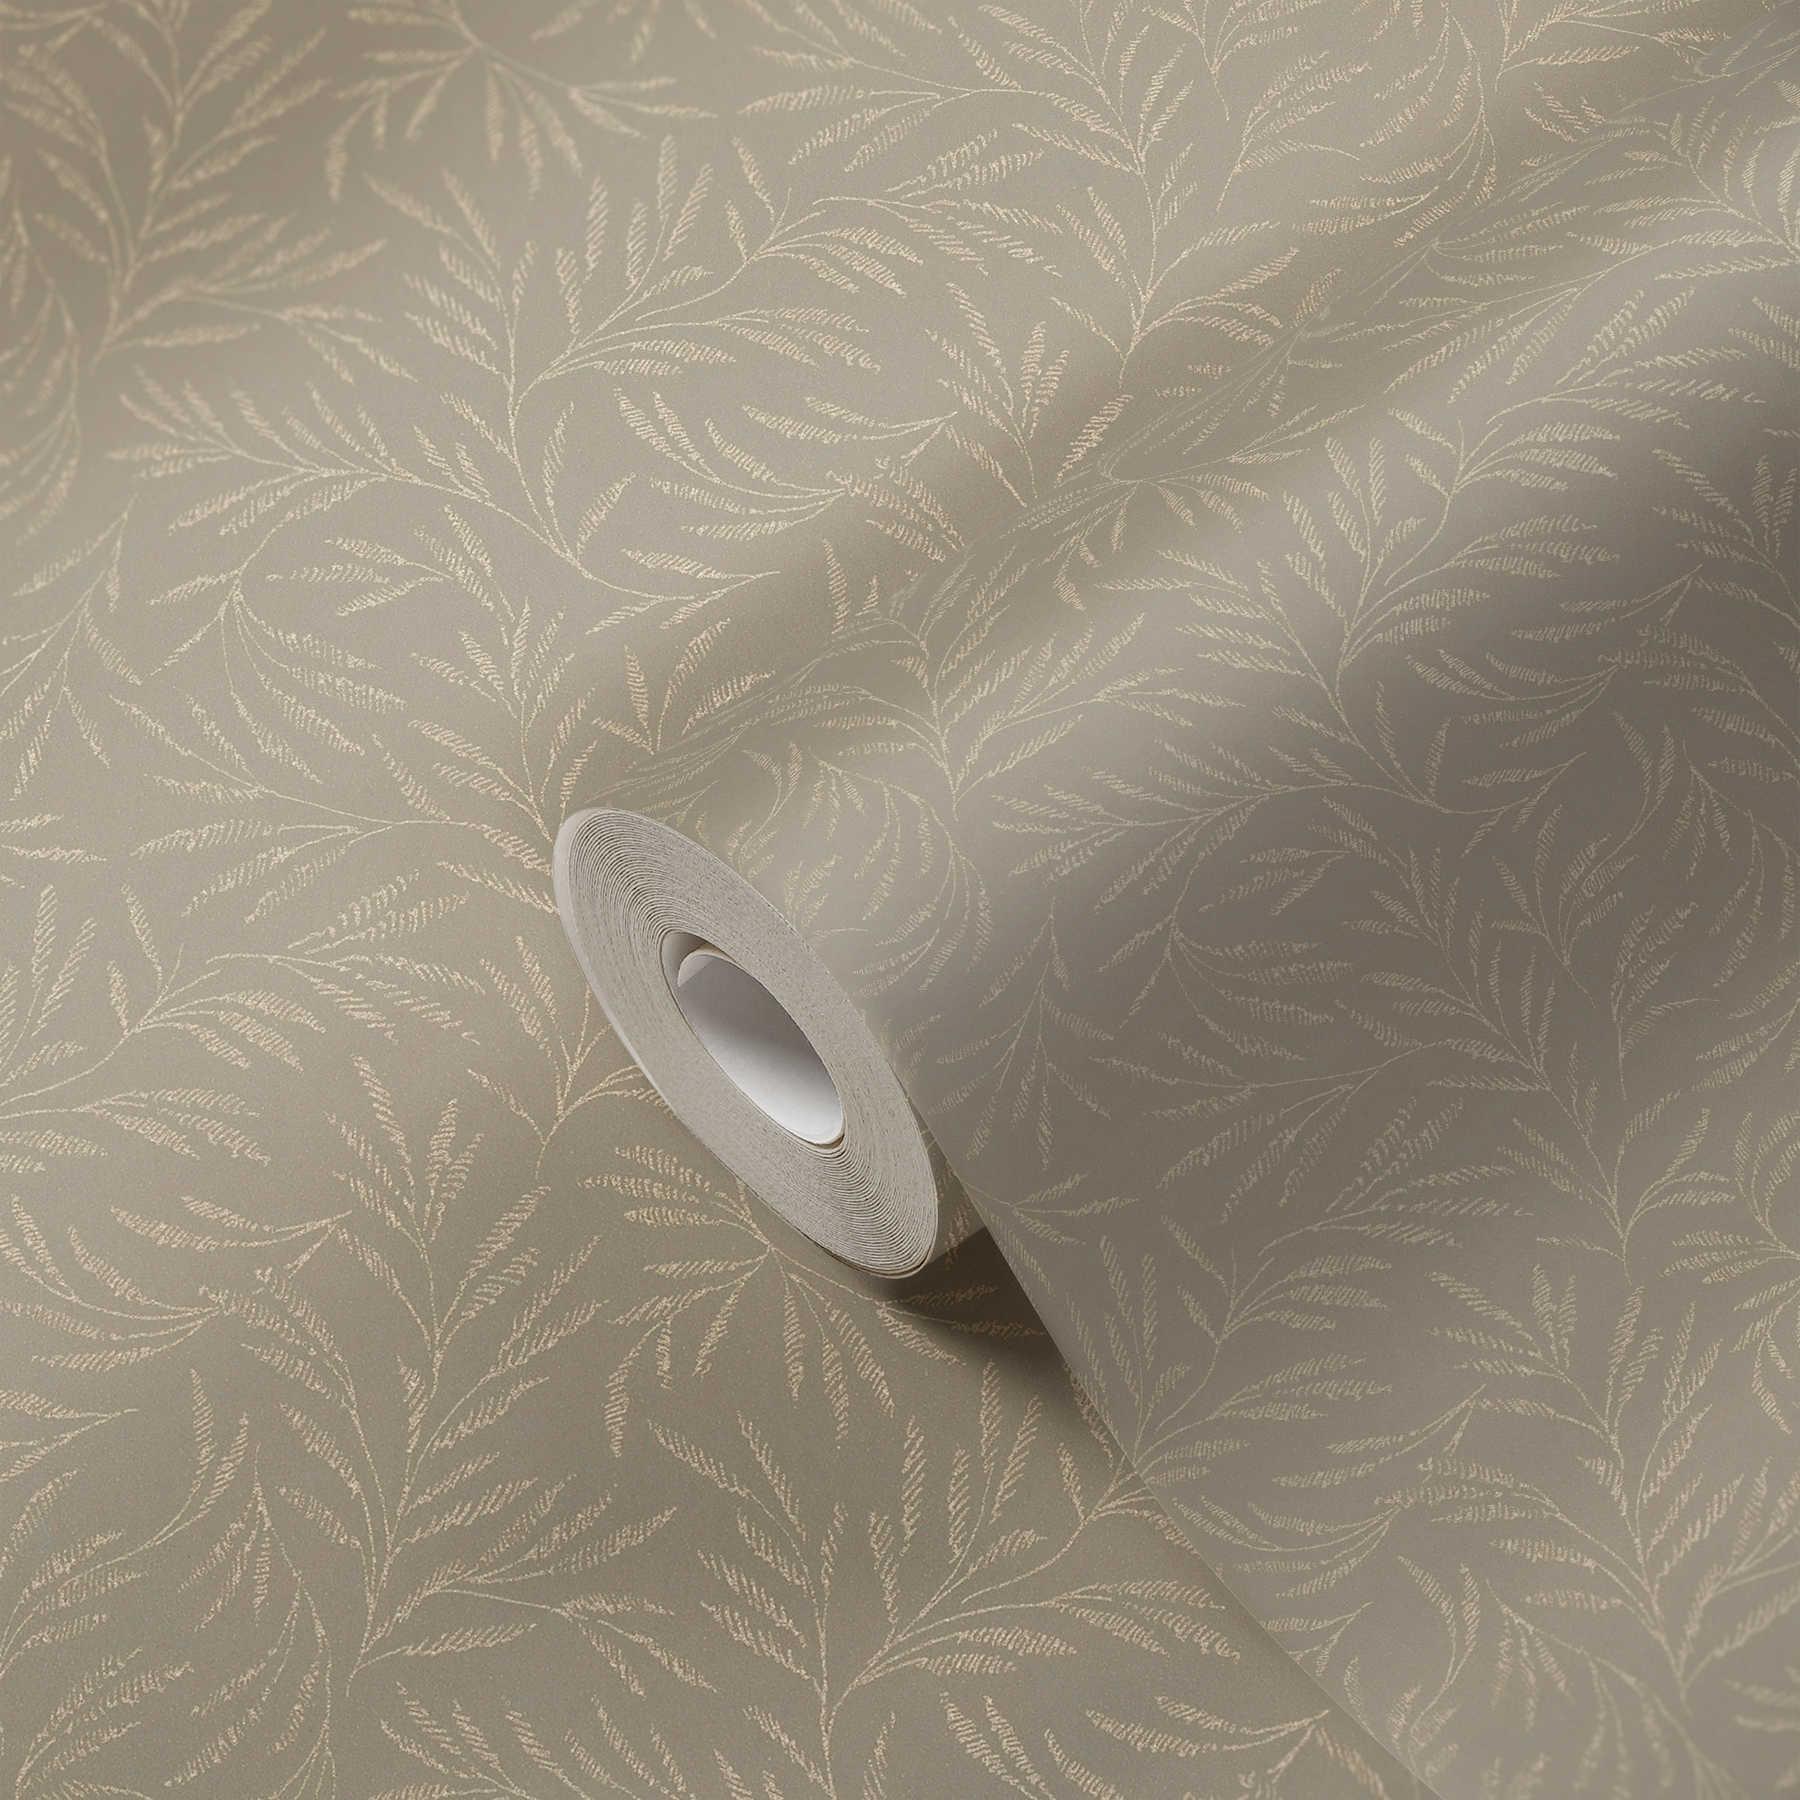             Muster-Tapete Metallic Blätter Ranken – Braun, Grau
        